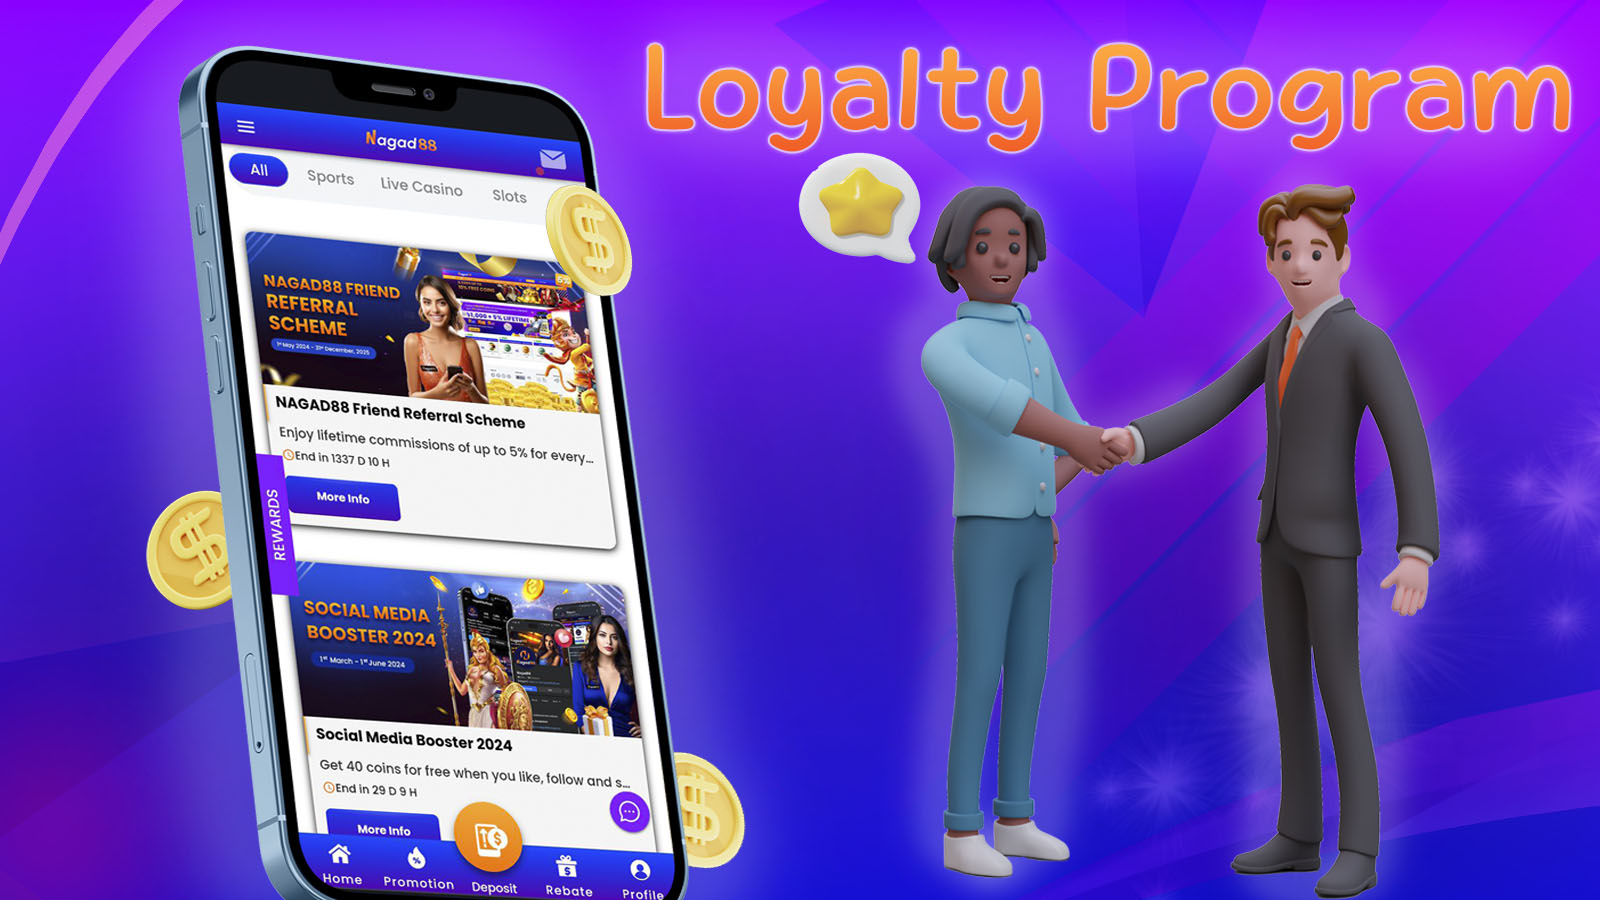 Nagad88 loyalty program for regular customers